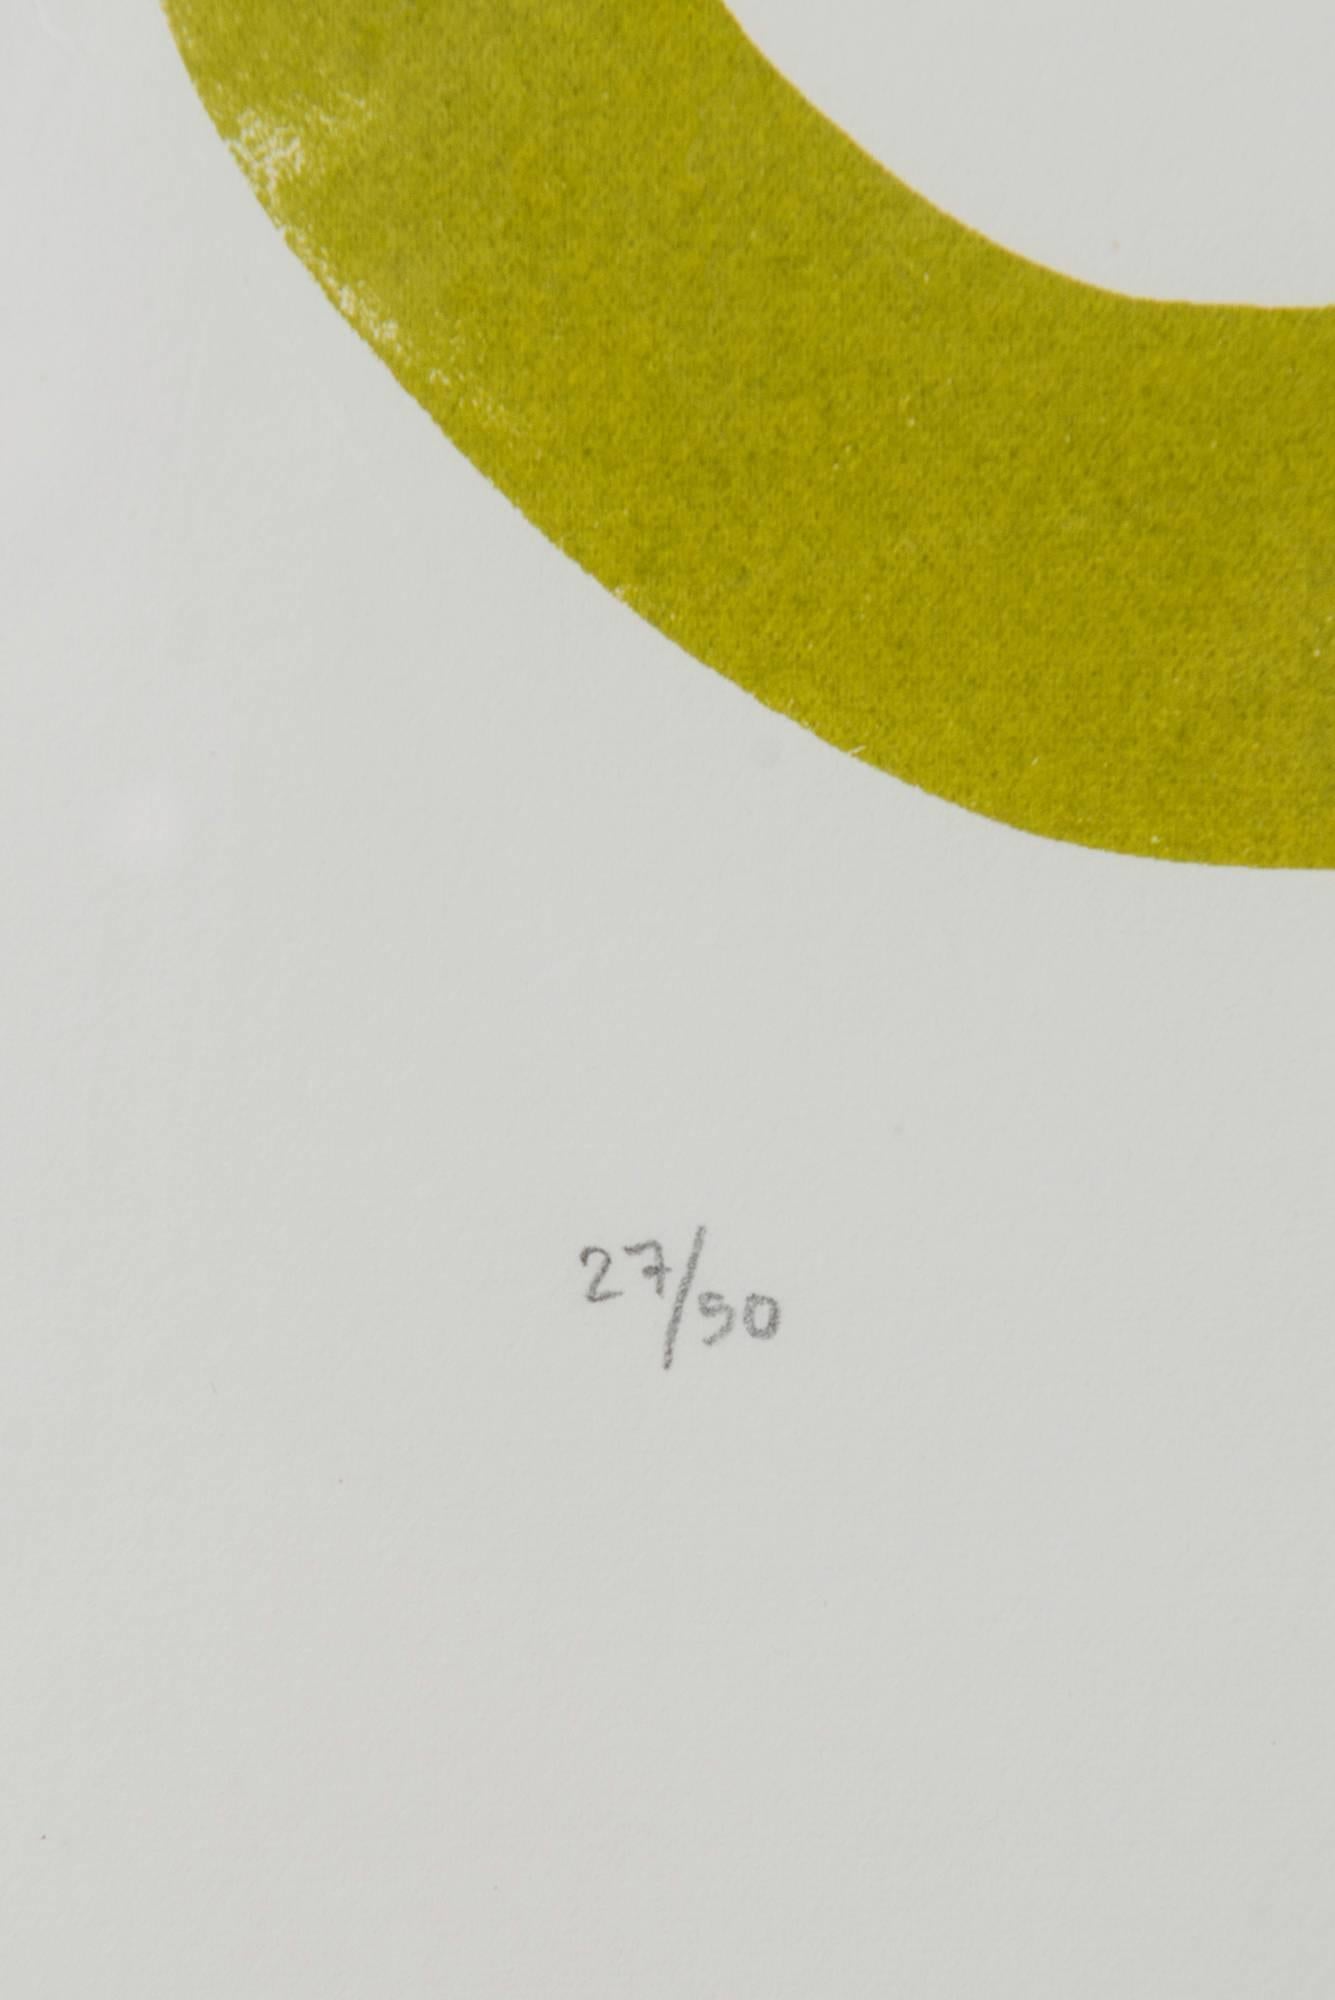 Mid-20th Century Pierre Olofsson Lithograph Edition 27/50